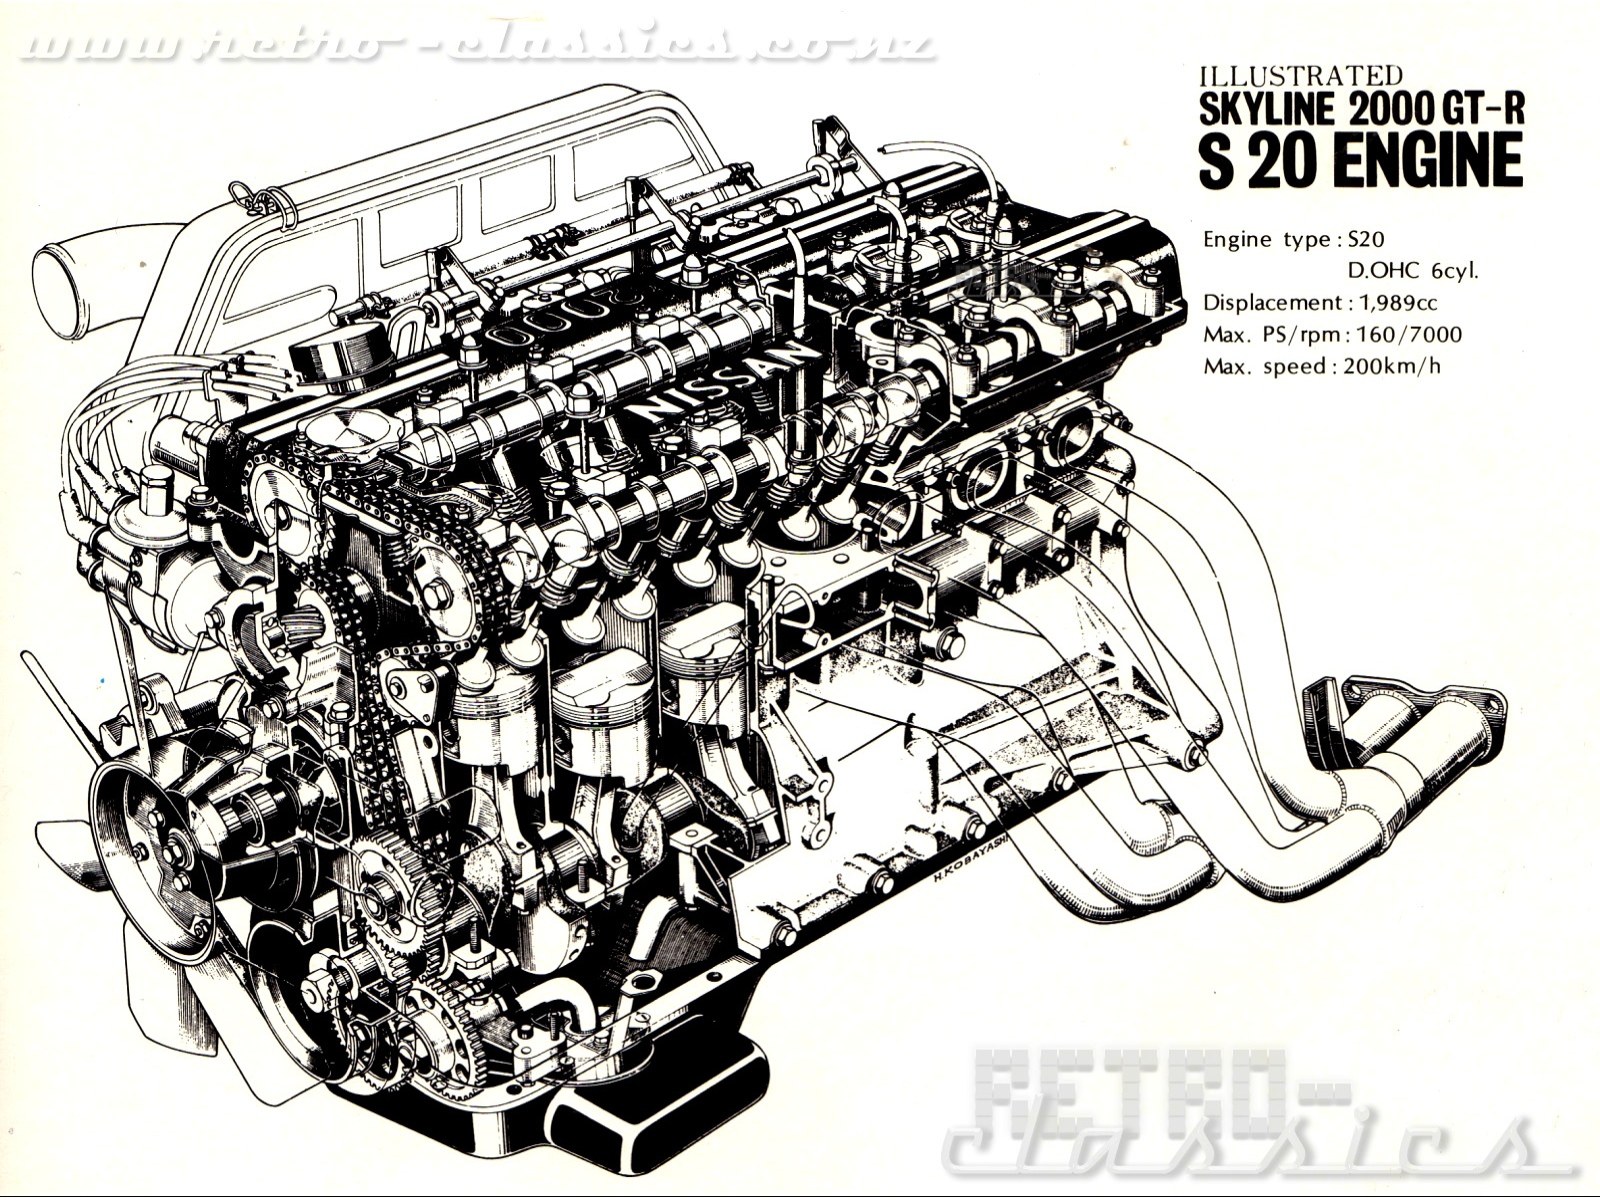 Illustrated S20 Engine Wallpaper